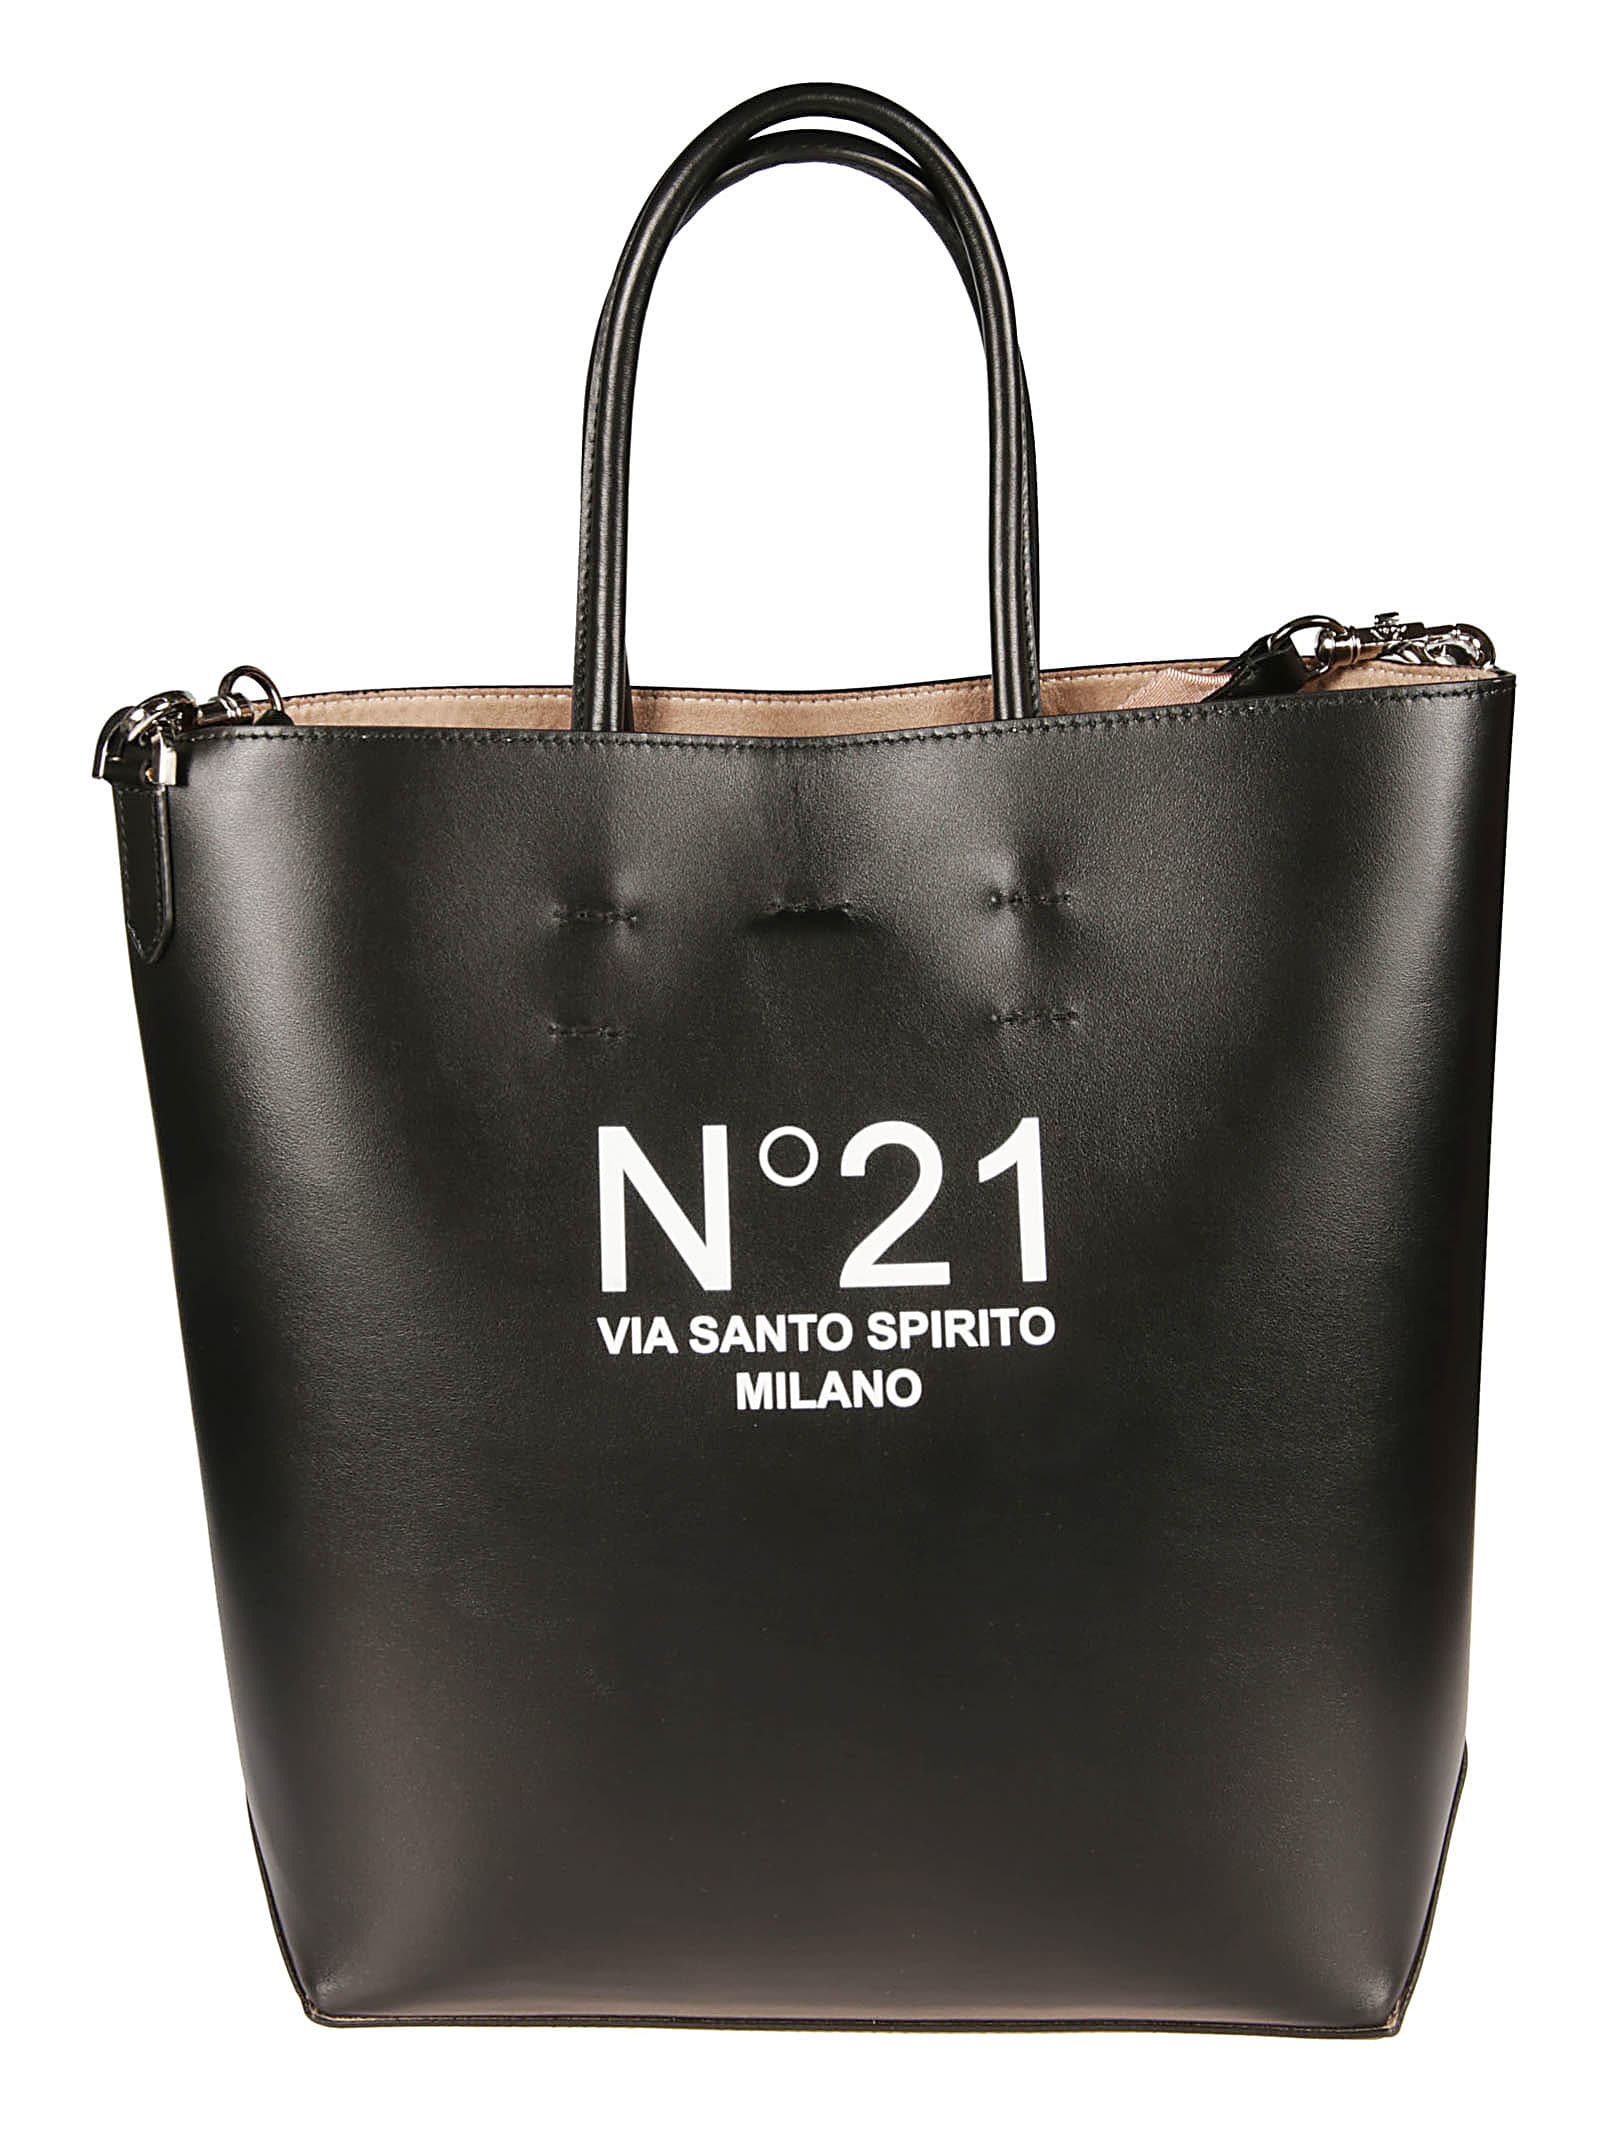 N.21 Logo Print Top Handle Shopper Bag